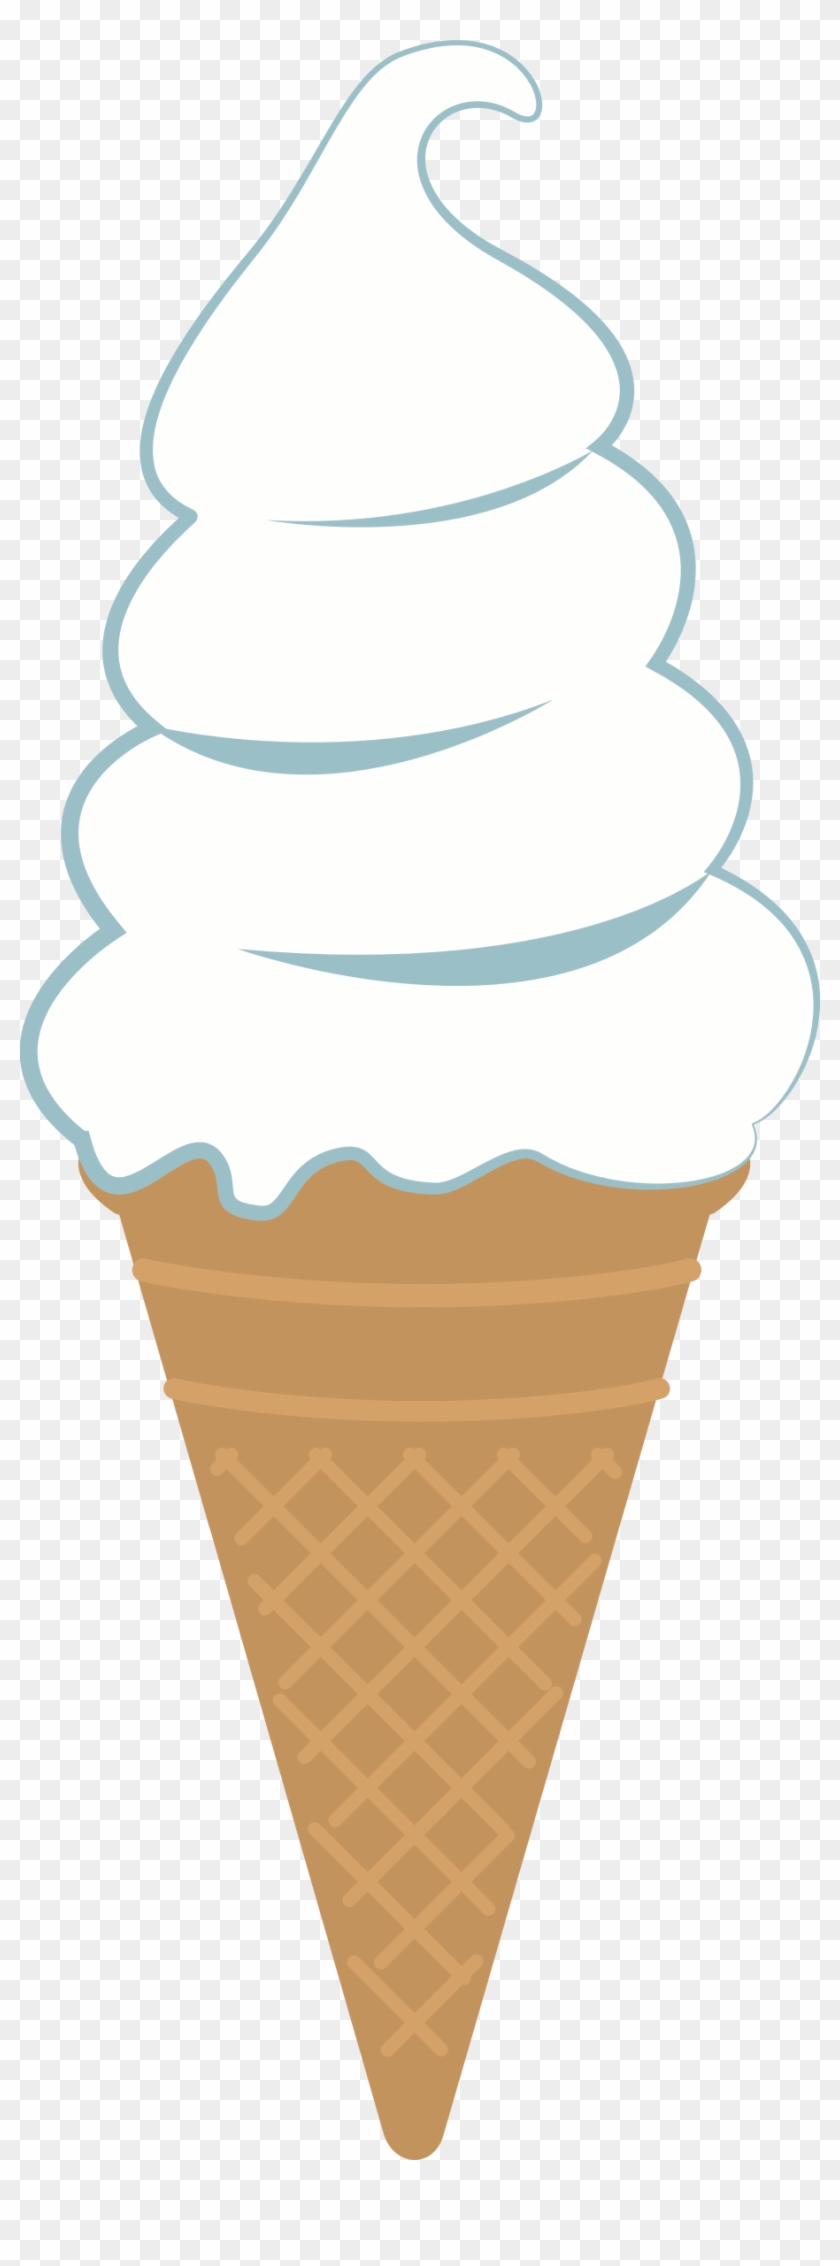 Big Image - Clip Art Ice Cream Cone - Png Download #1380181